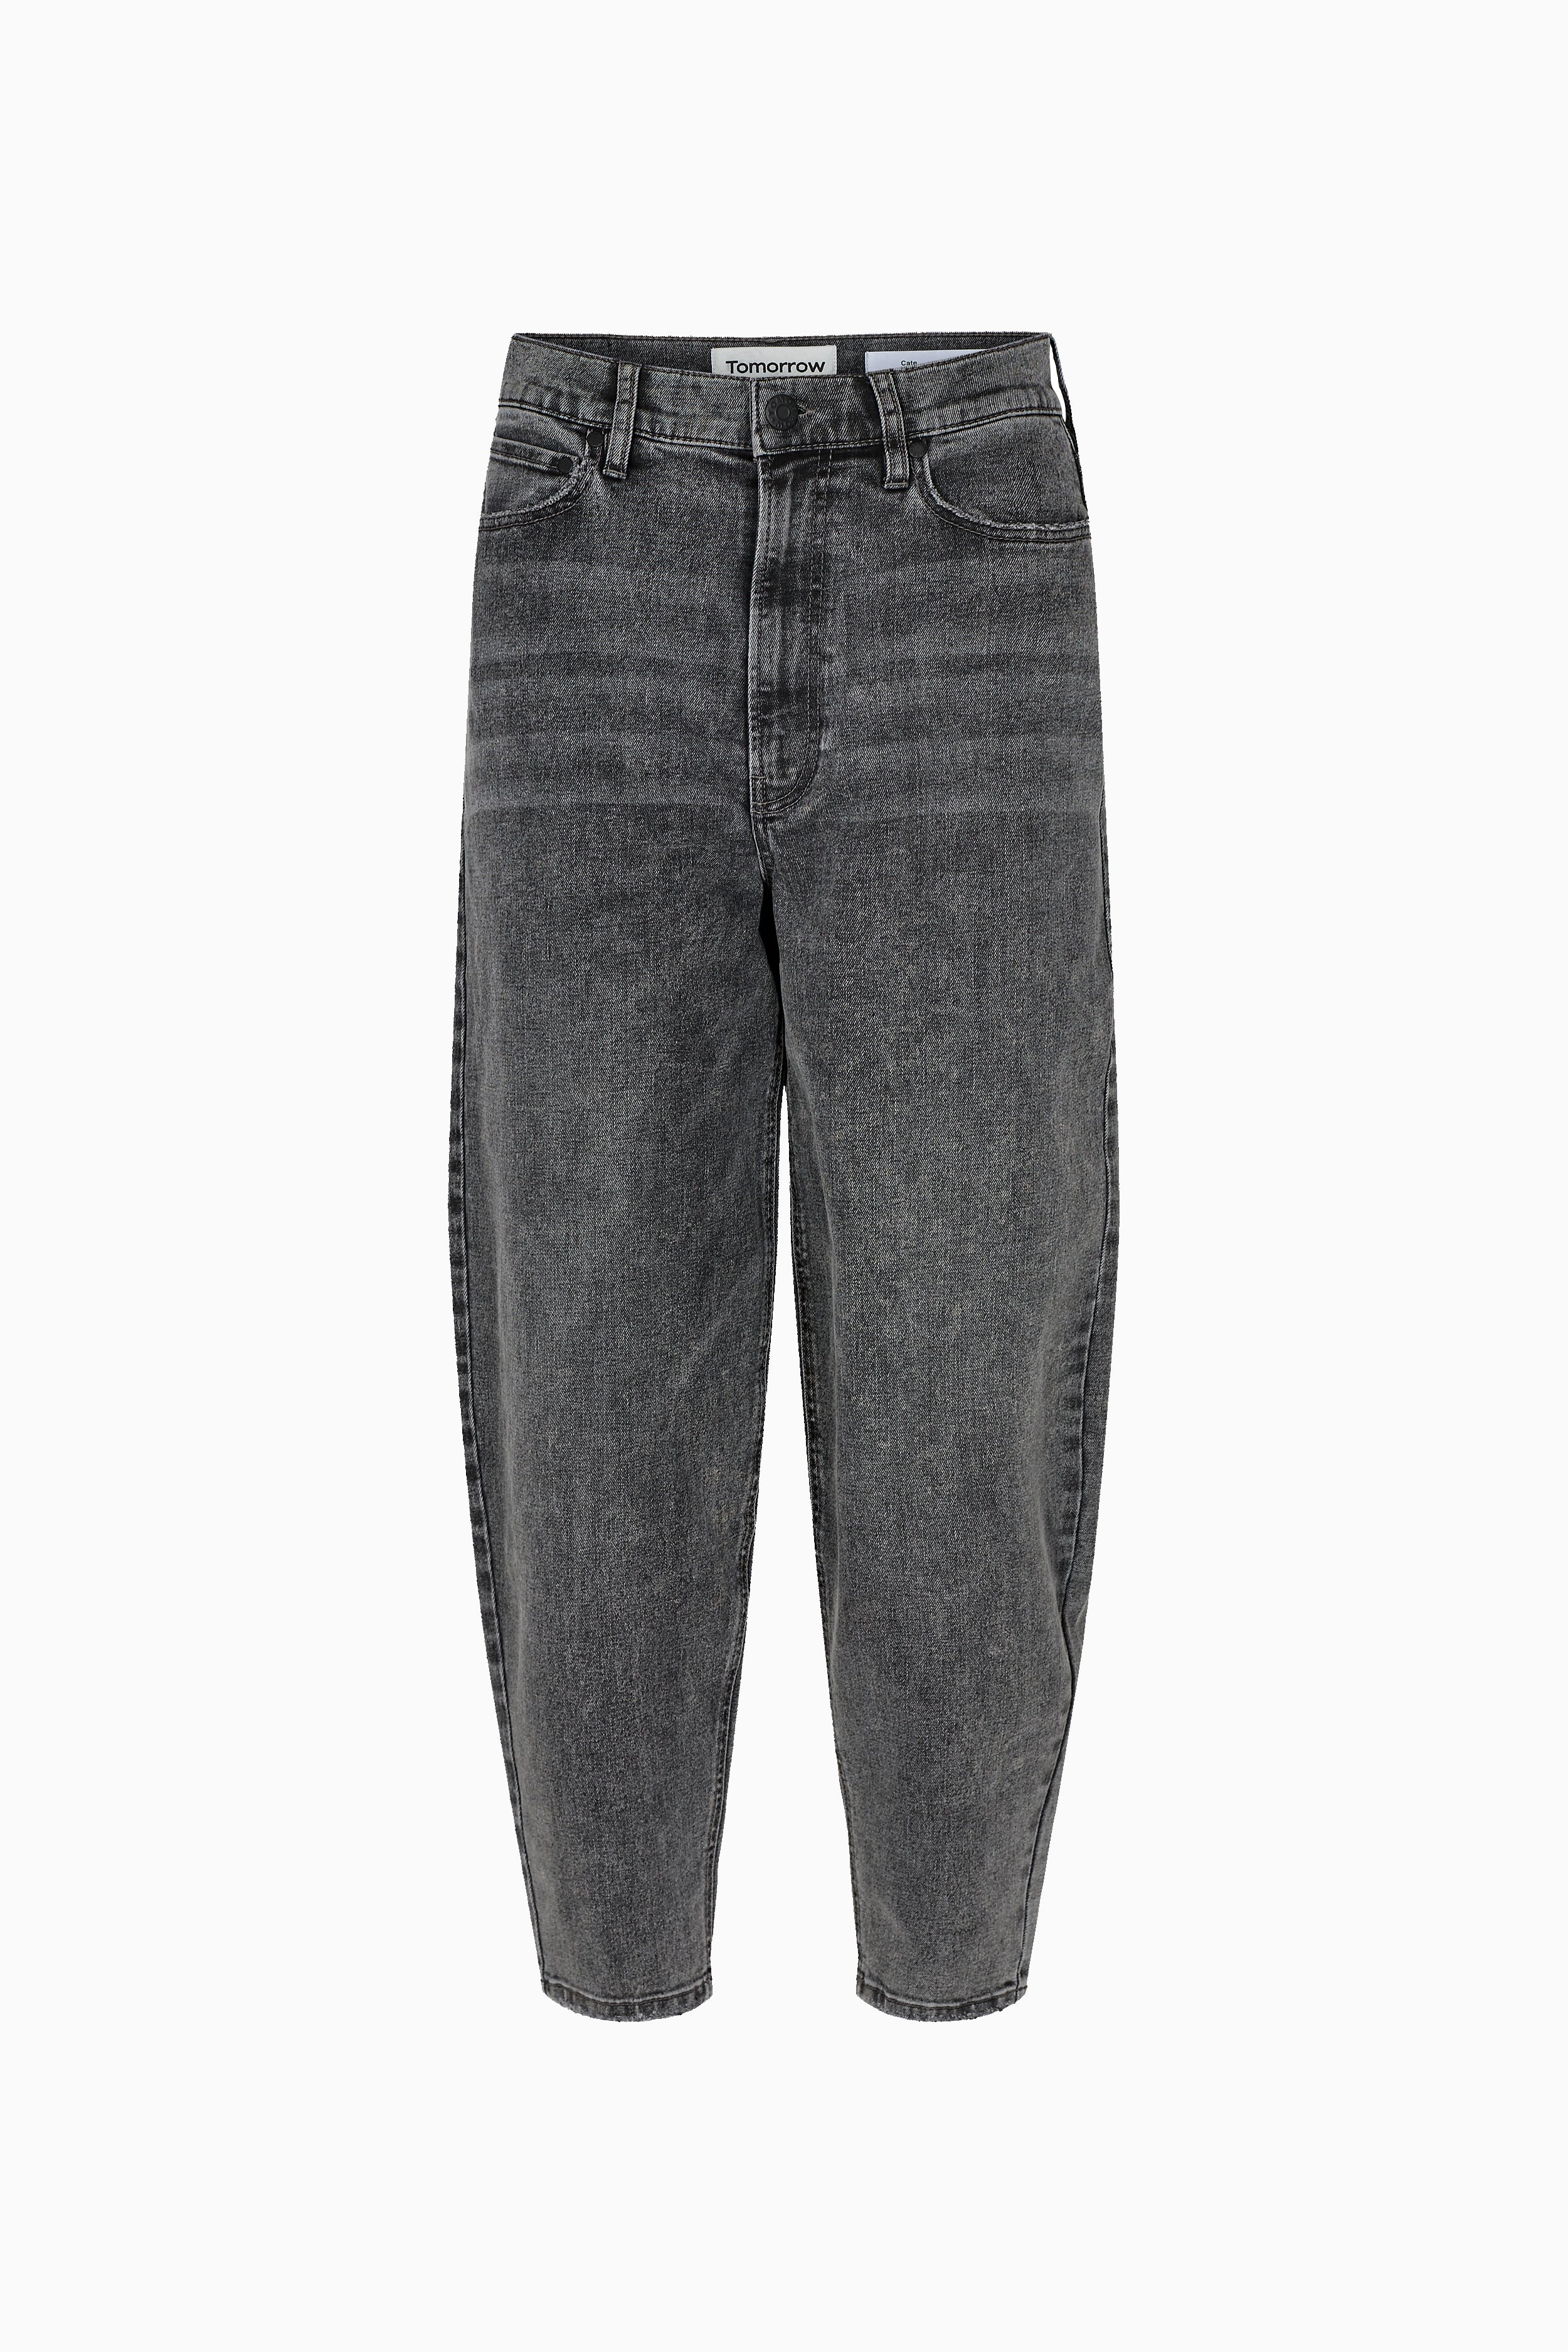 Tomorrow TMRW Cate Bullet Shape Jeans - Vintage Grey Jeans & Pants 8 Grey